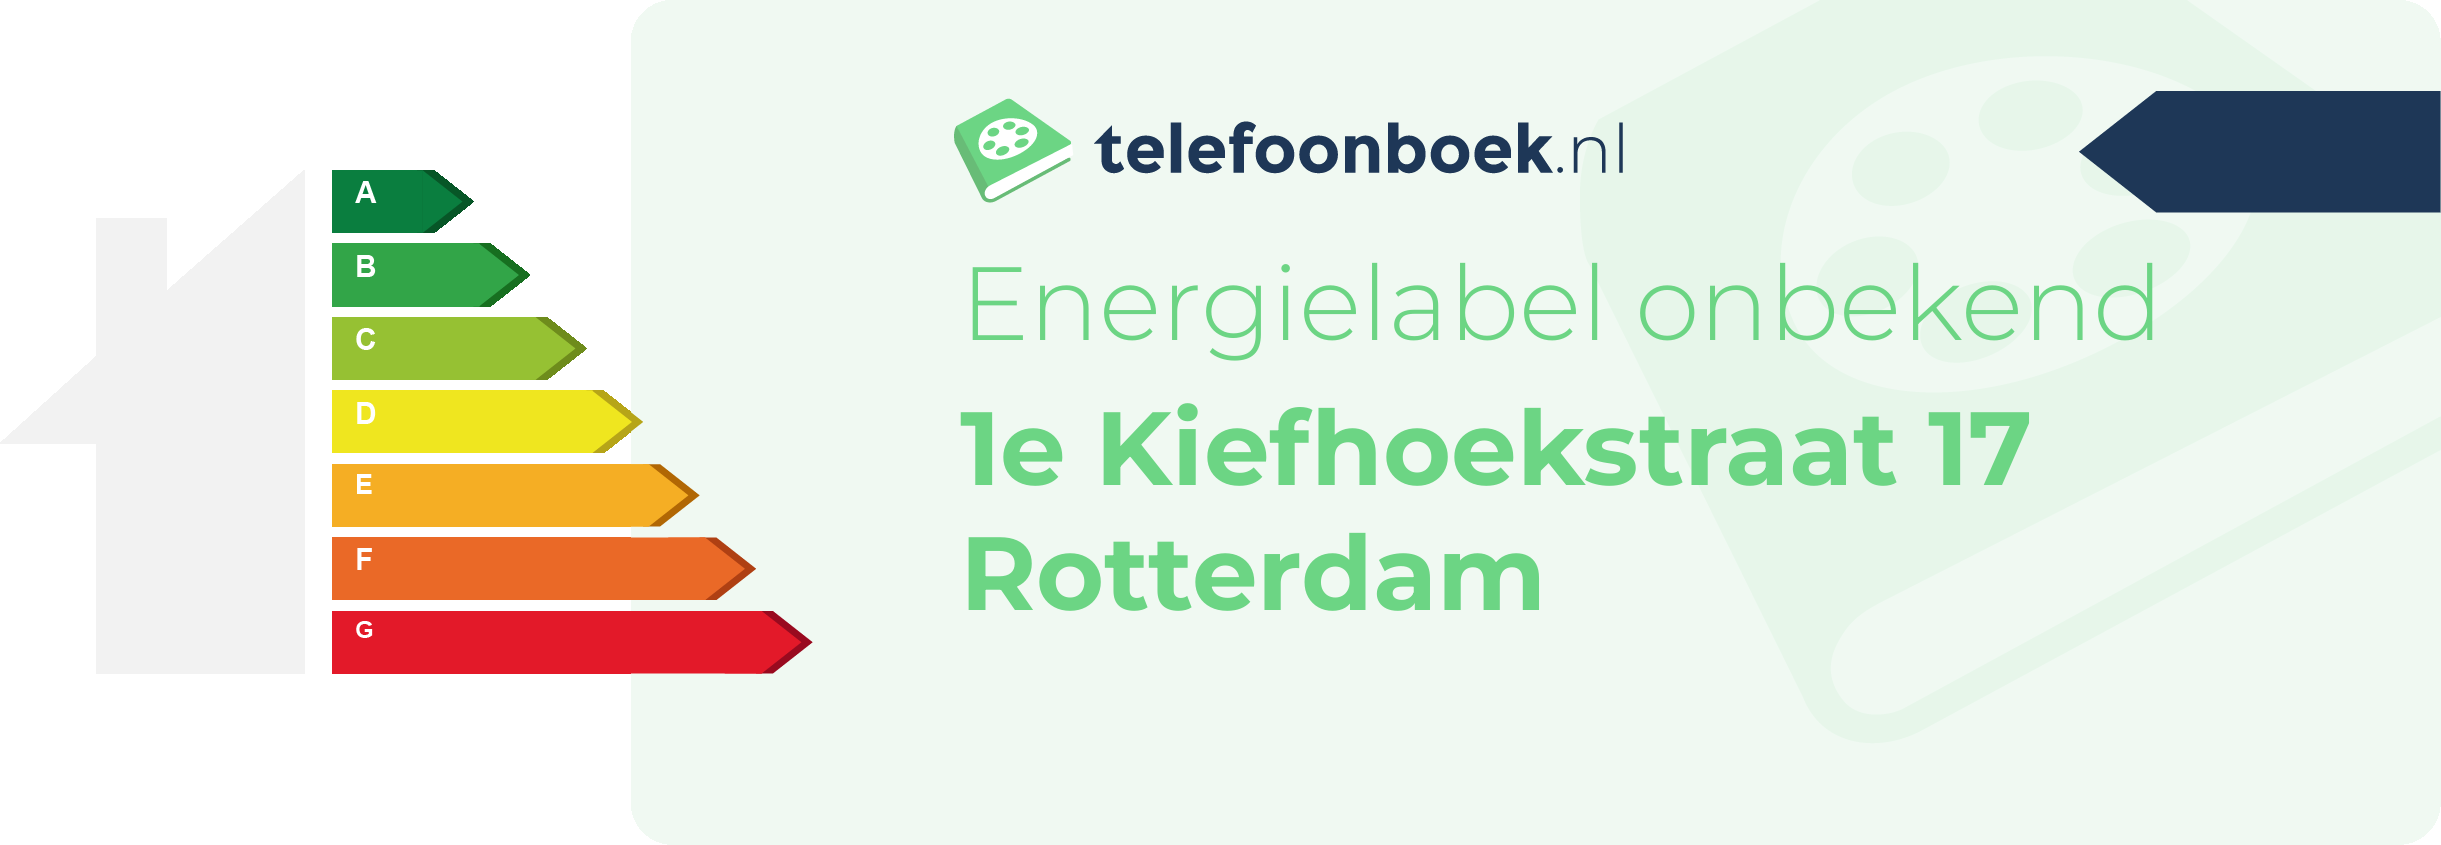 Energielabel 1e Kiefhoekstraat 17 Rotterdam